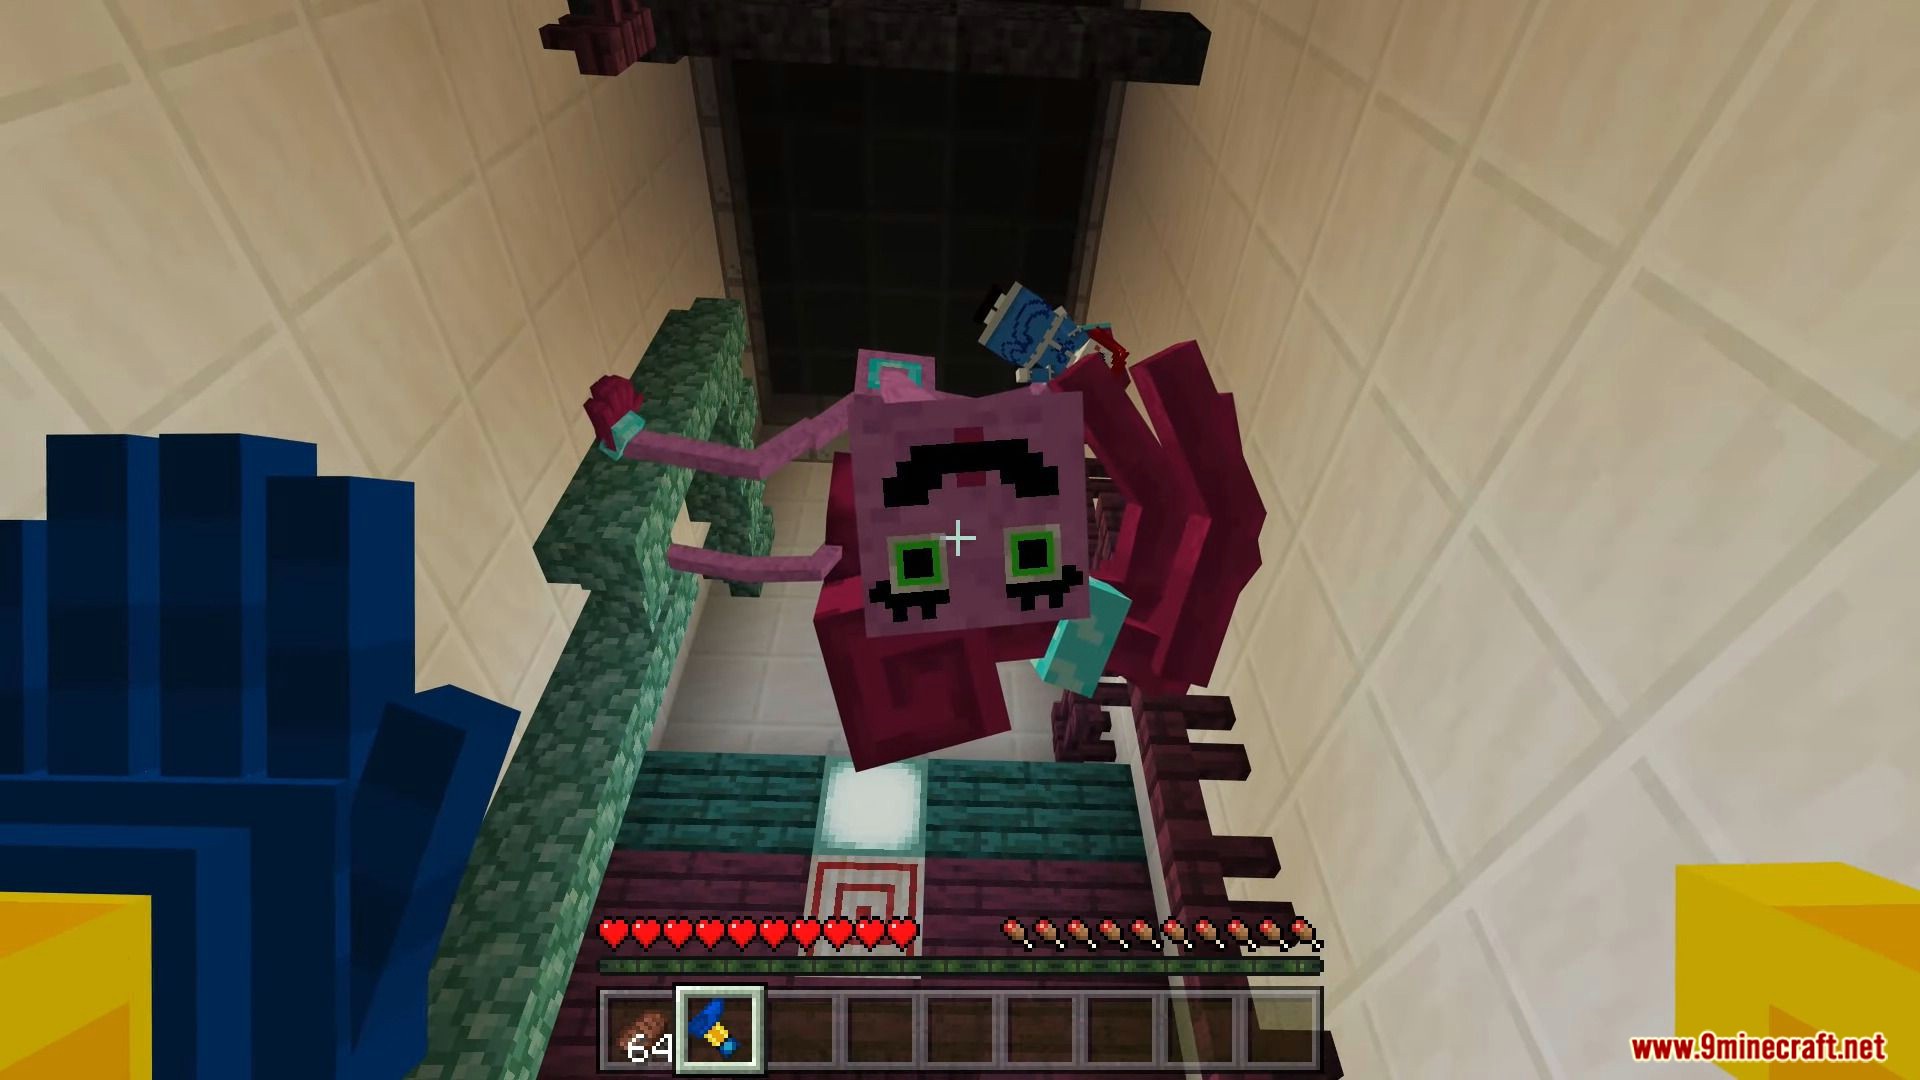 Poppy Playtime Chapter 2 Minecraft Mod